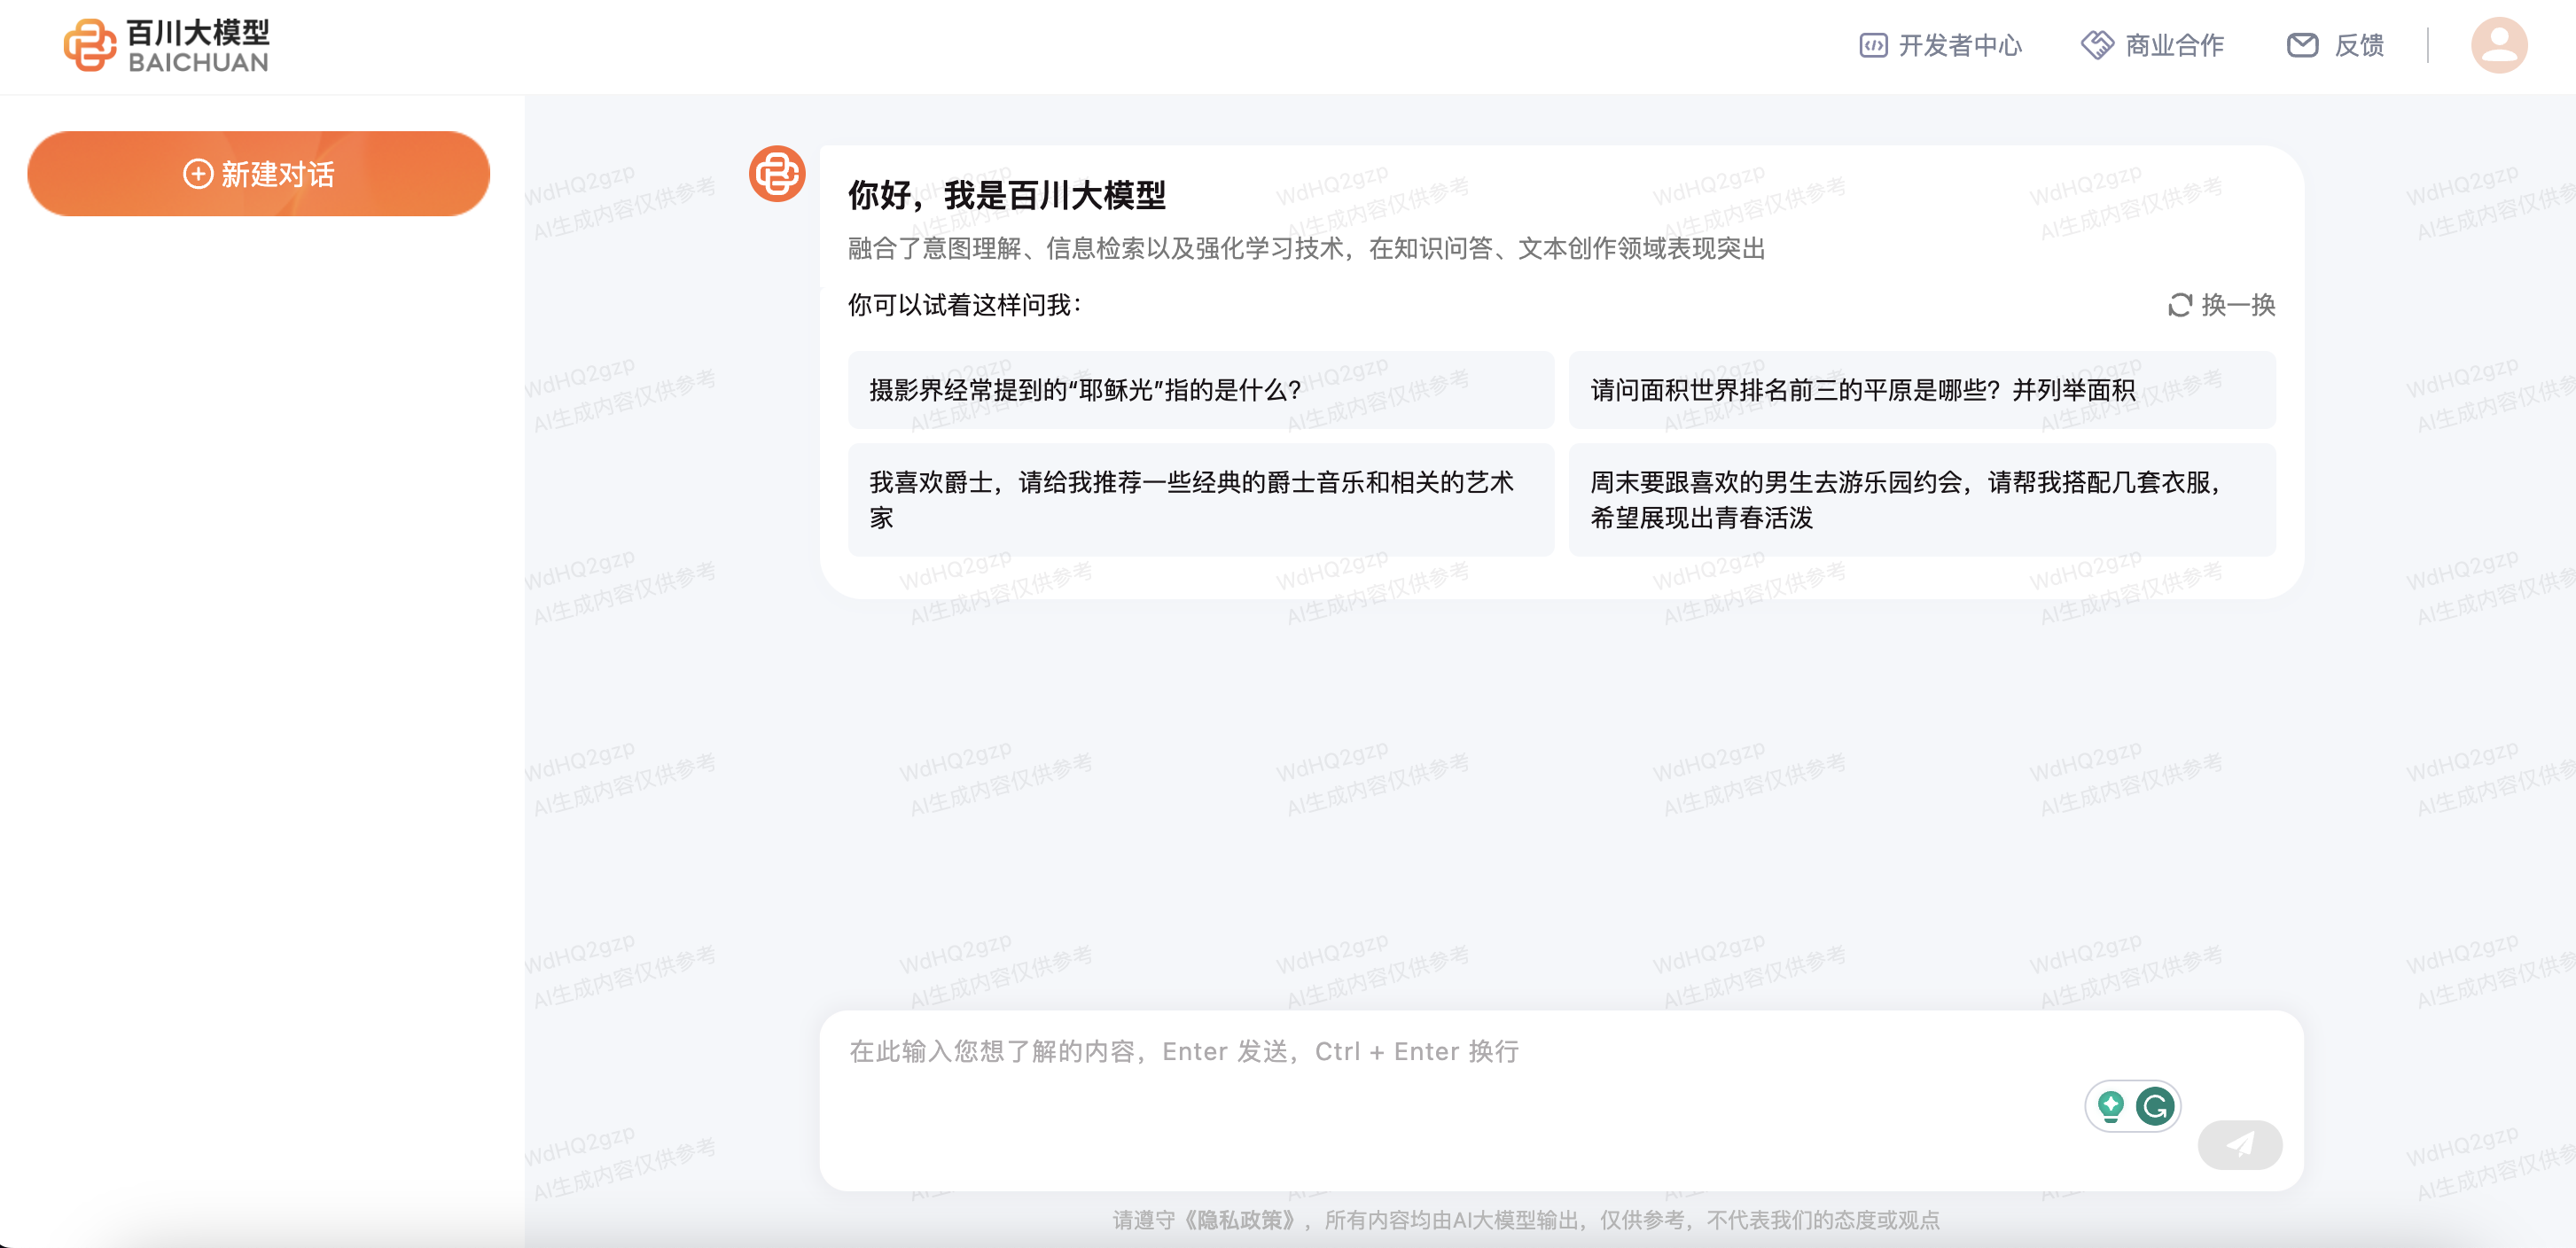 Baichuan chatbot home page screenshot